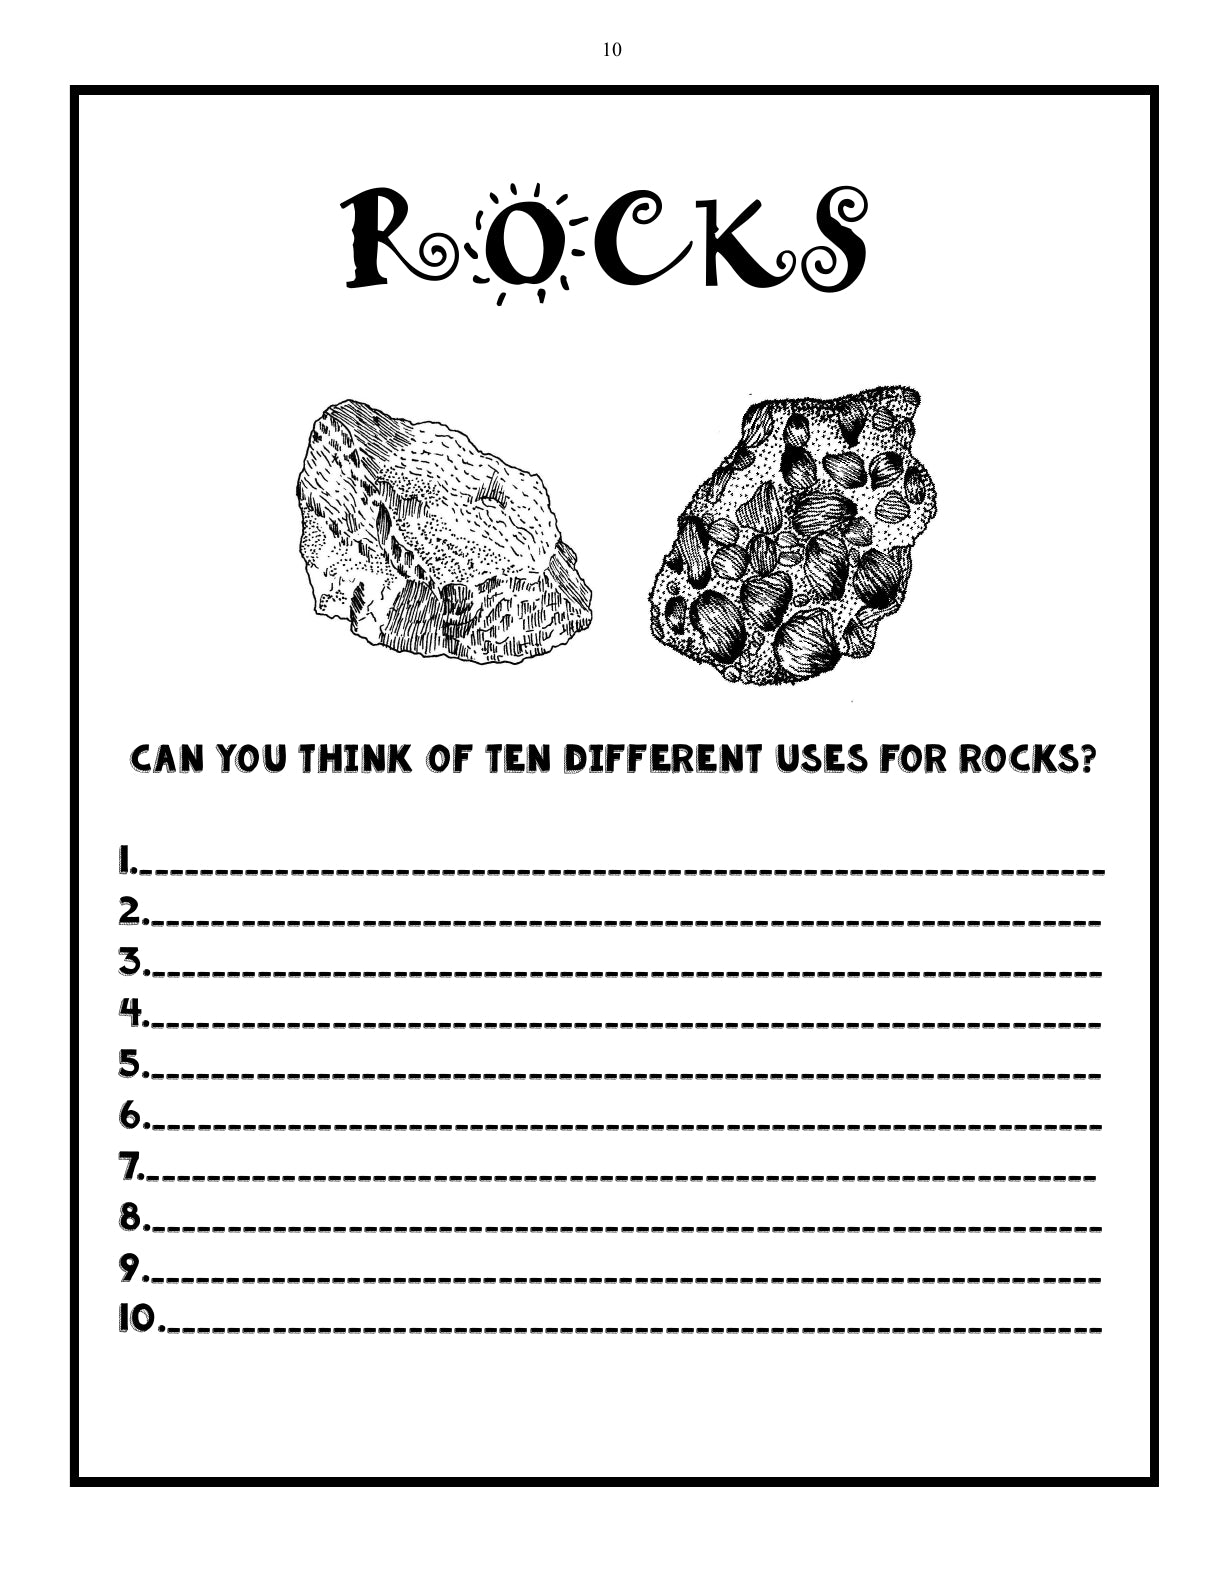 (Age 7+) Rocks & Minerals Research Handbook